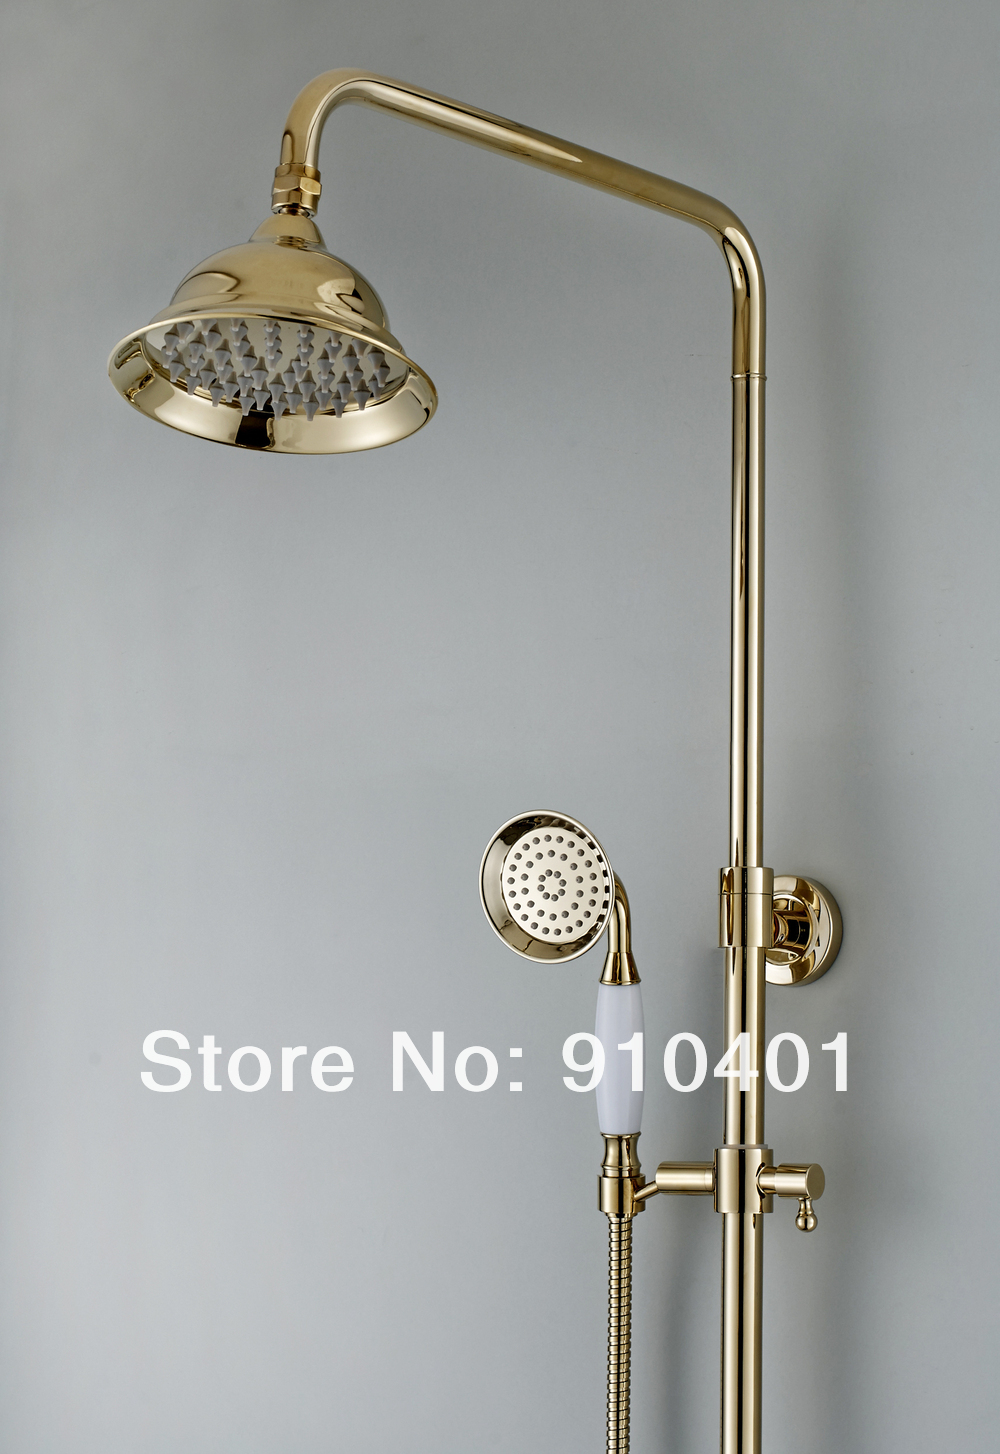 NEW Wholesale /Retail Promotion NEW Golden Bathroom Tub Shower Faucet Set Cross Handles Shower Column Mixer Tap